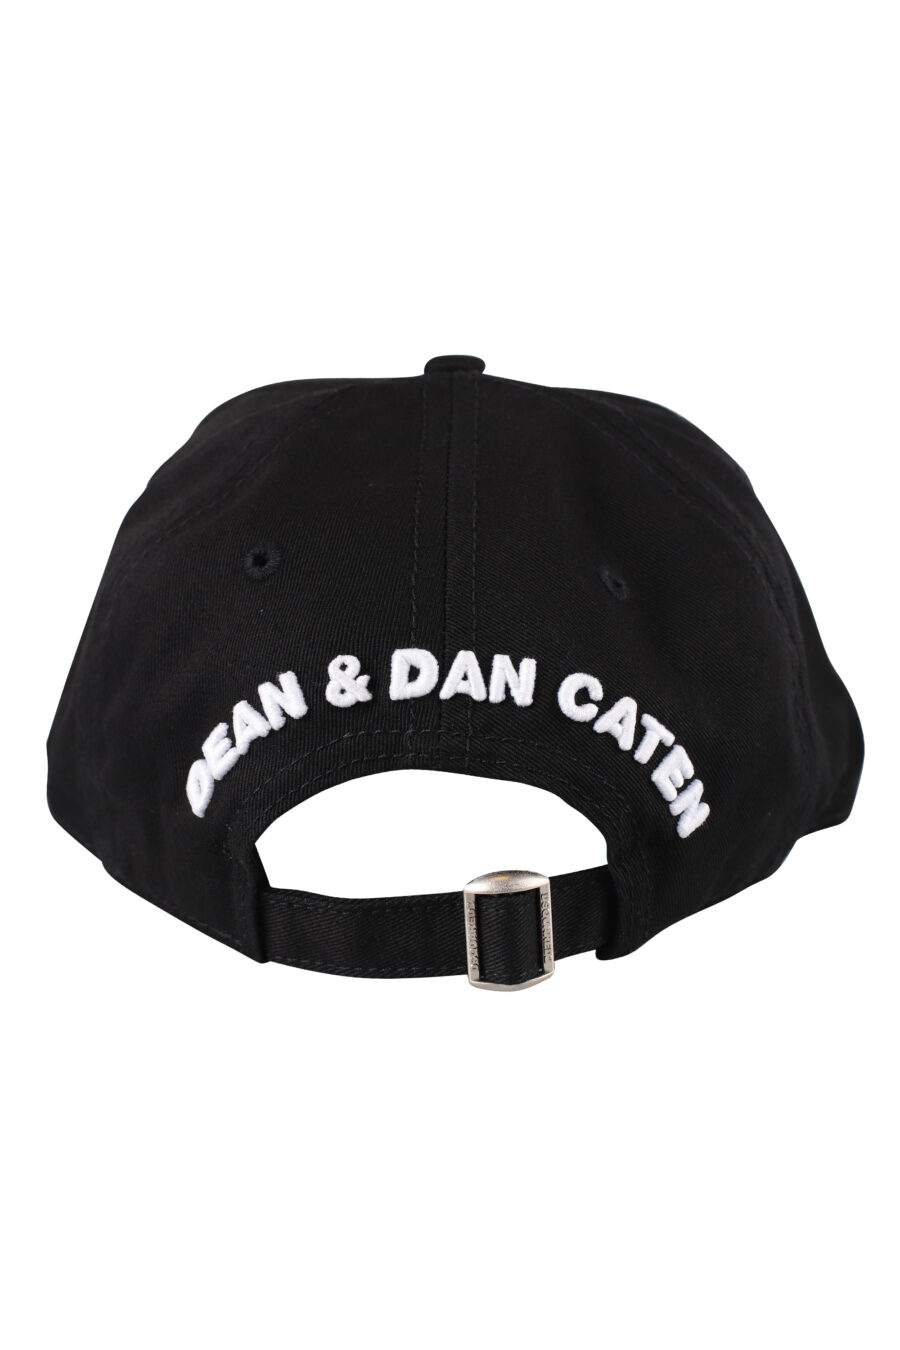 Schwarze Kappe mit weißem gesticktem Logo - IMG 1240